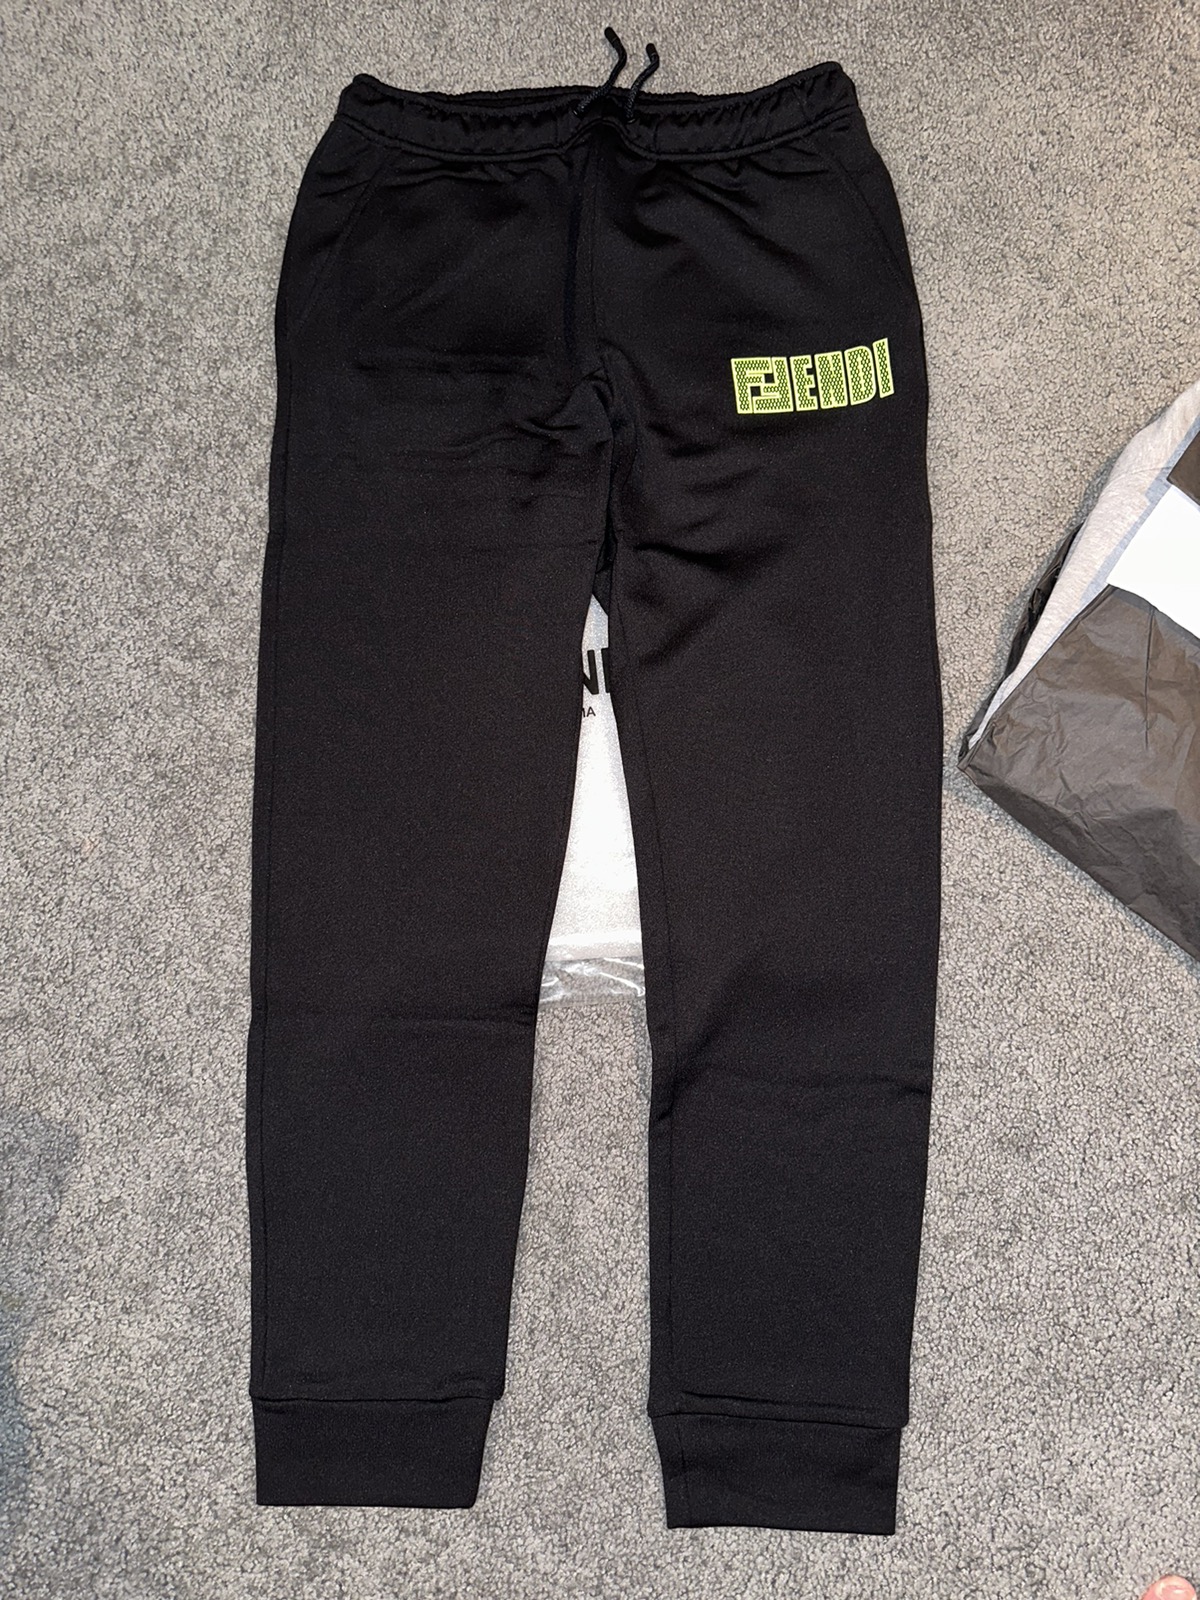 Fendi Mesh Logo Sweatpants - Size 50 - Brand New With Tags! - 6